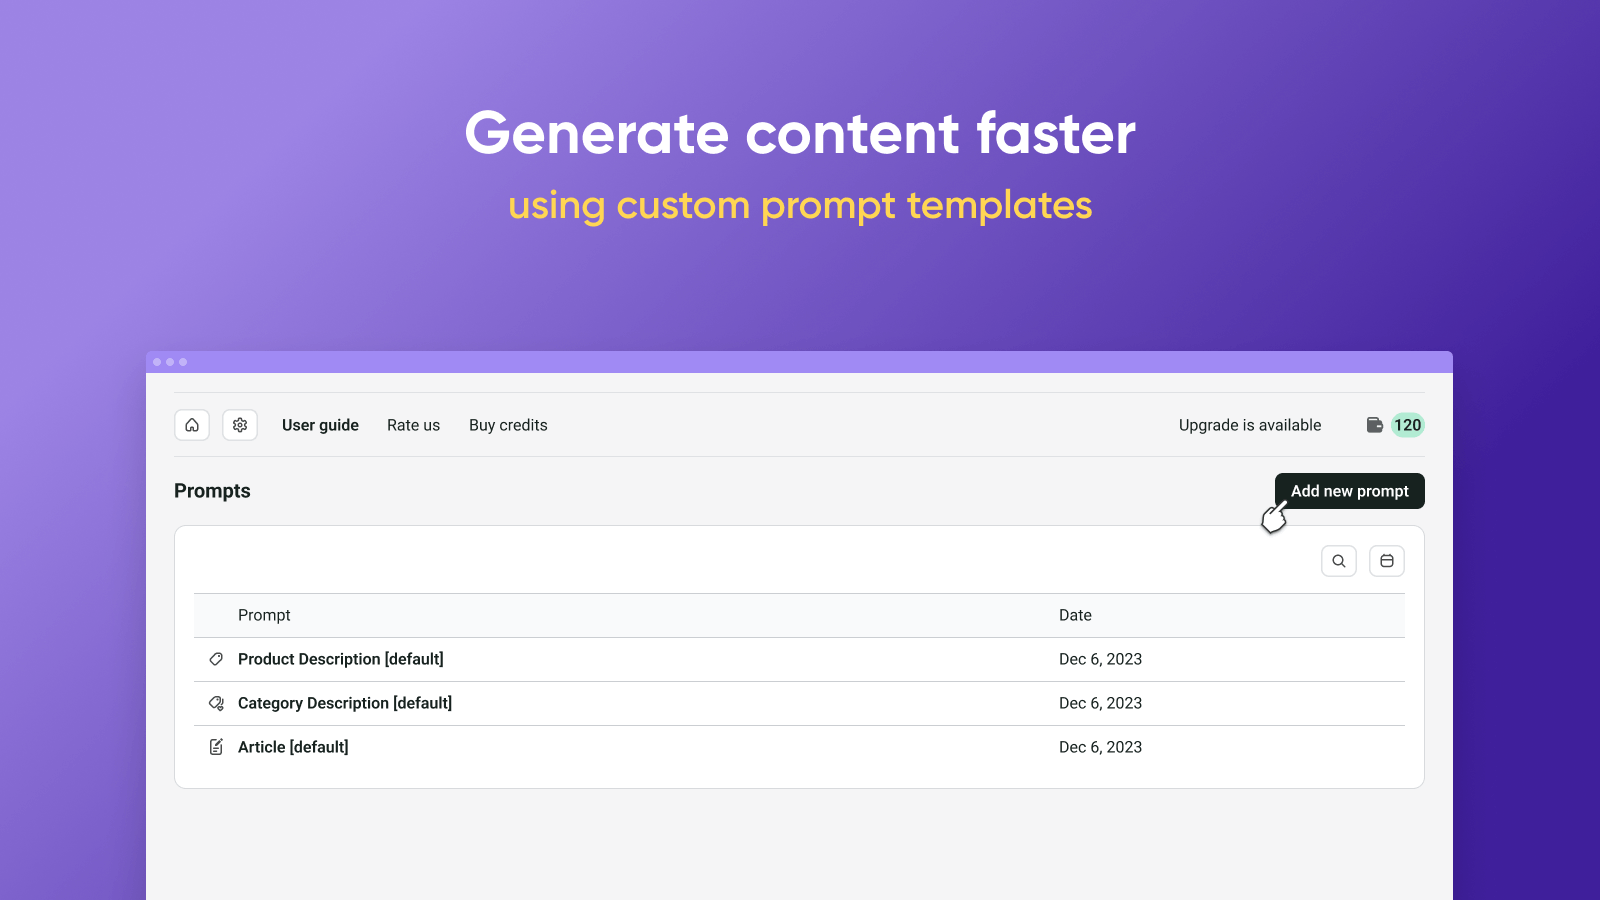 Generate content faster via handy custom prompt templates